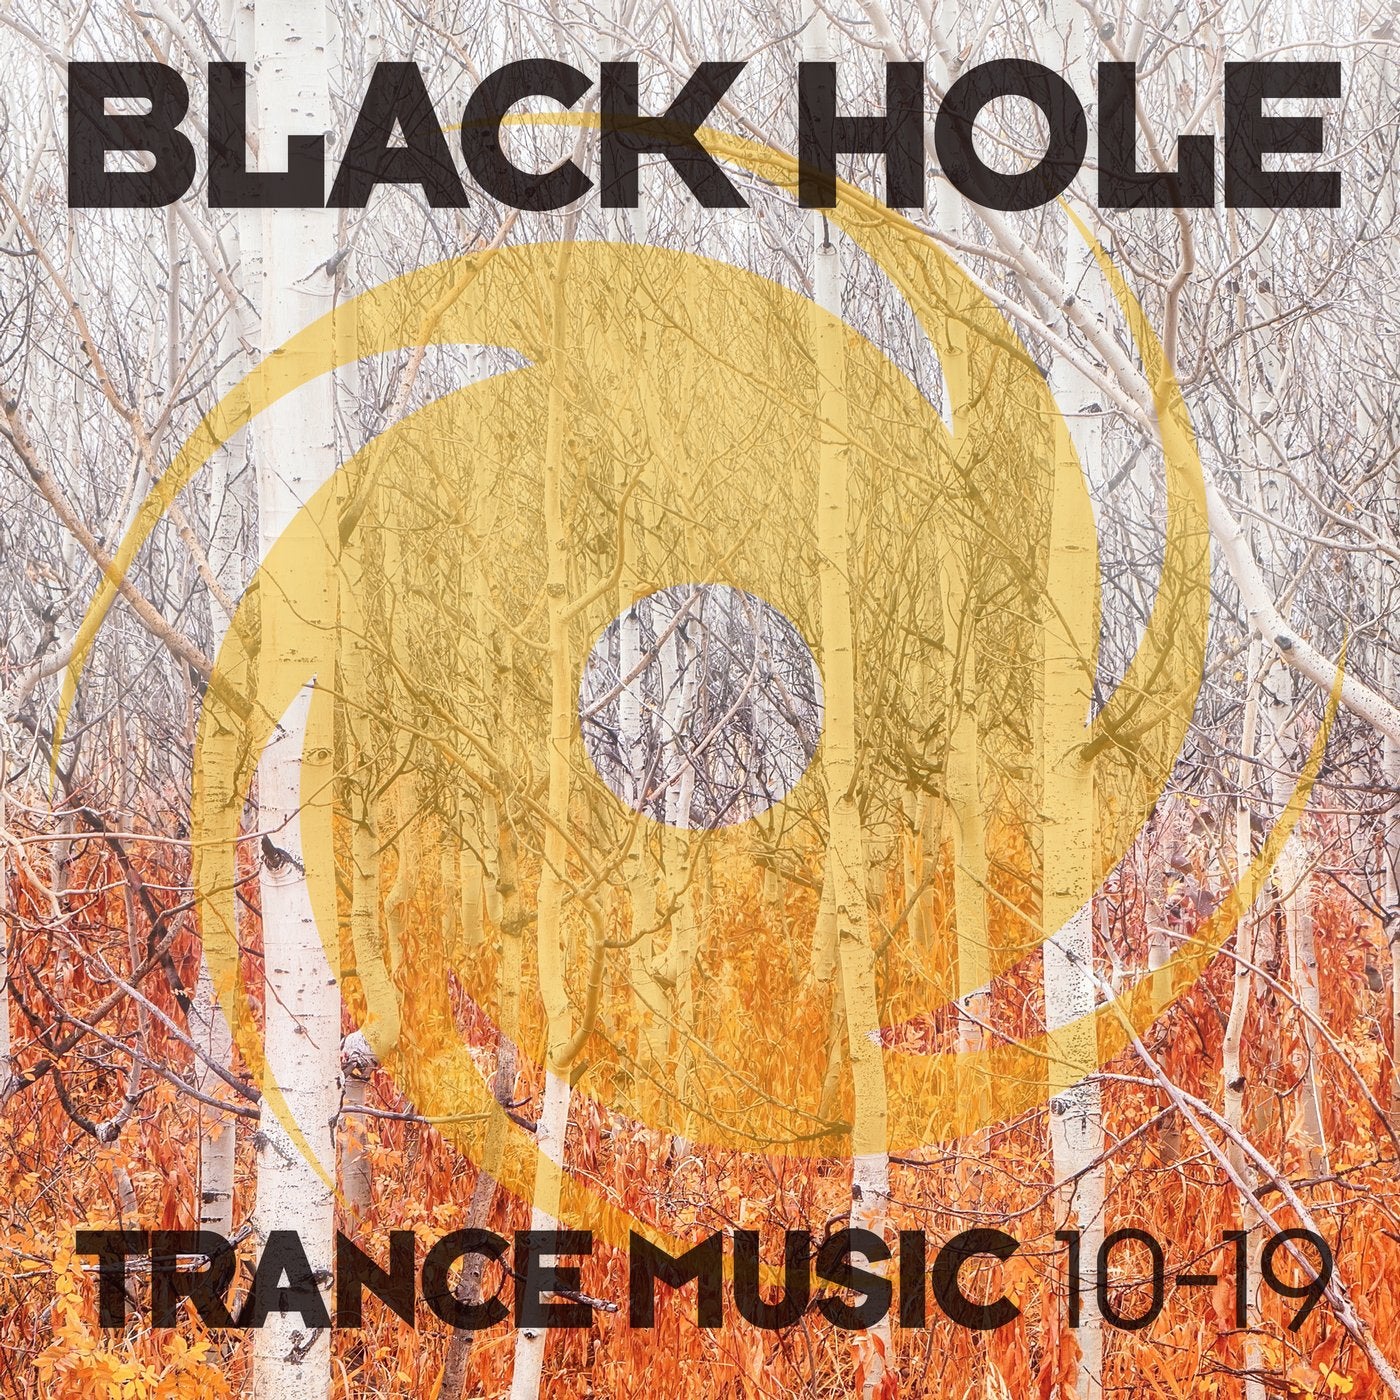 Black Hole Trance Music 10-19